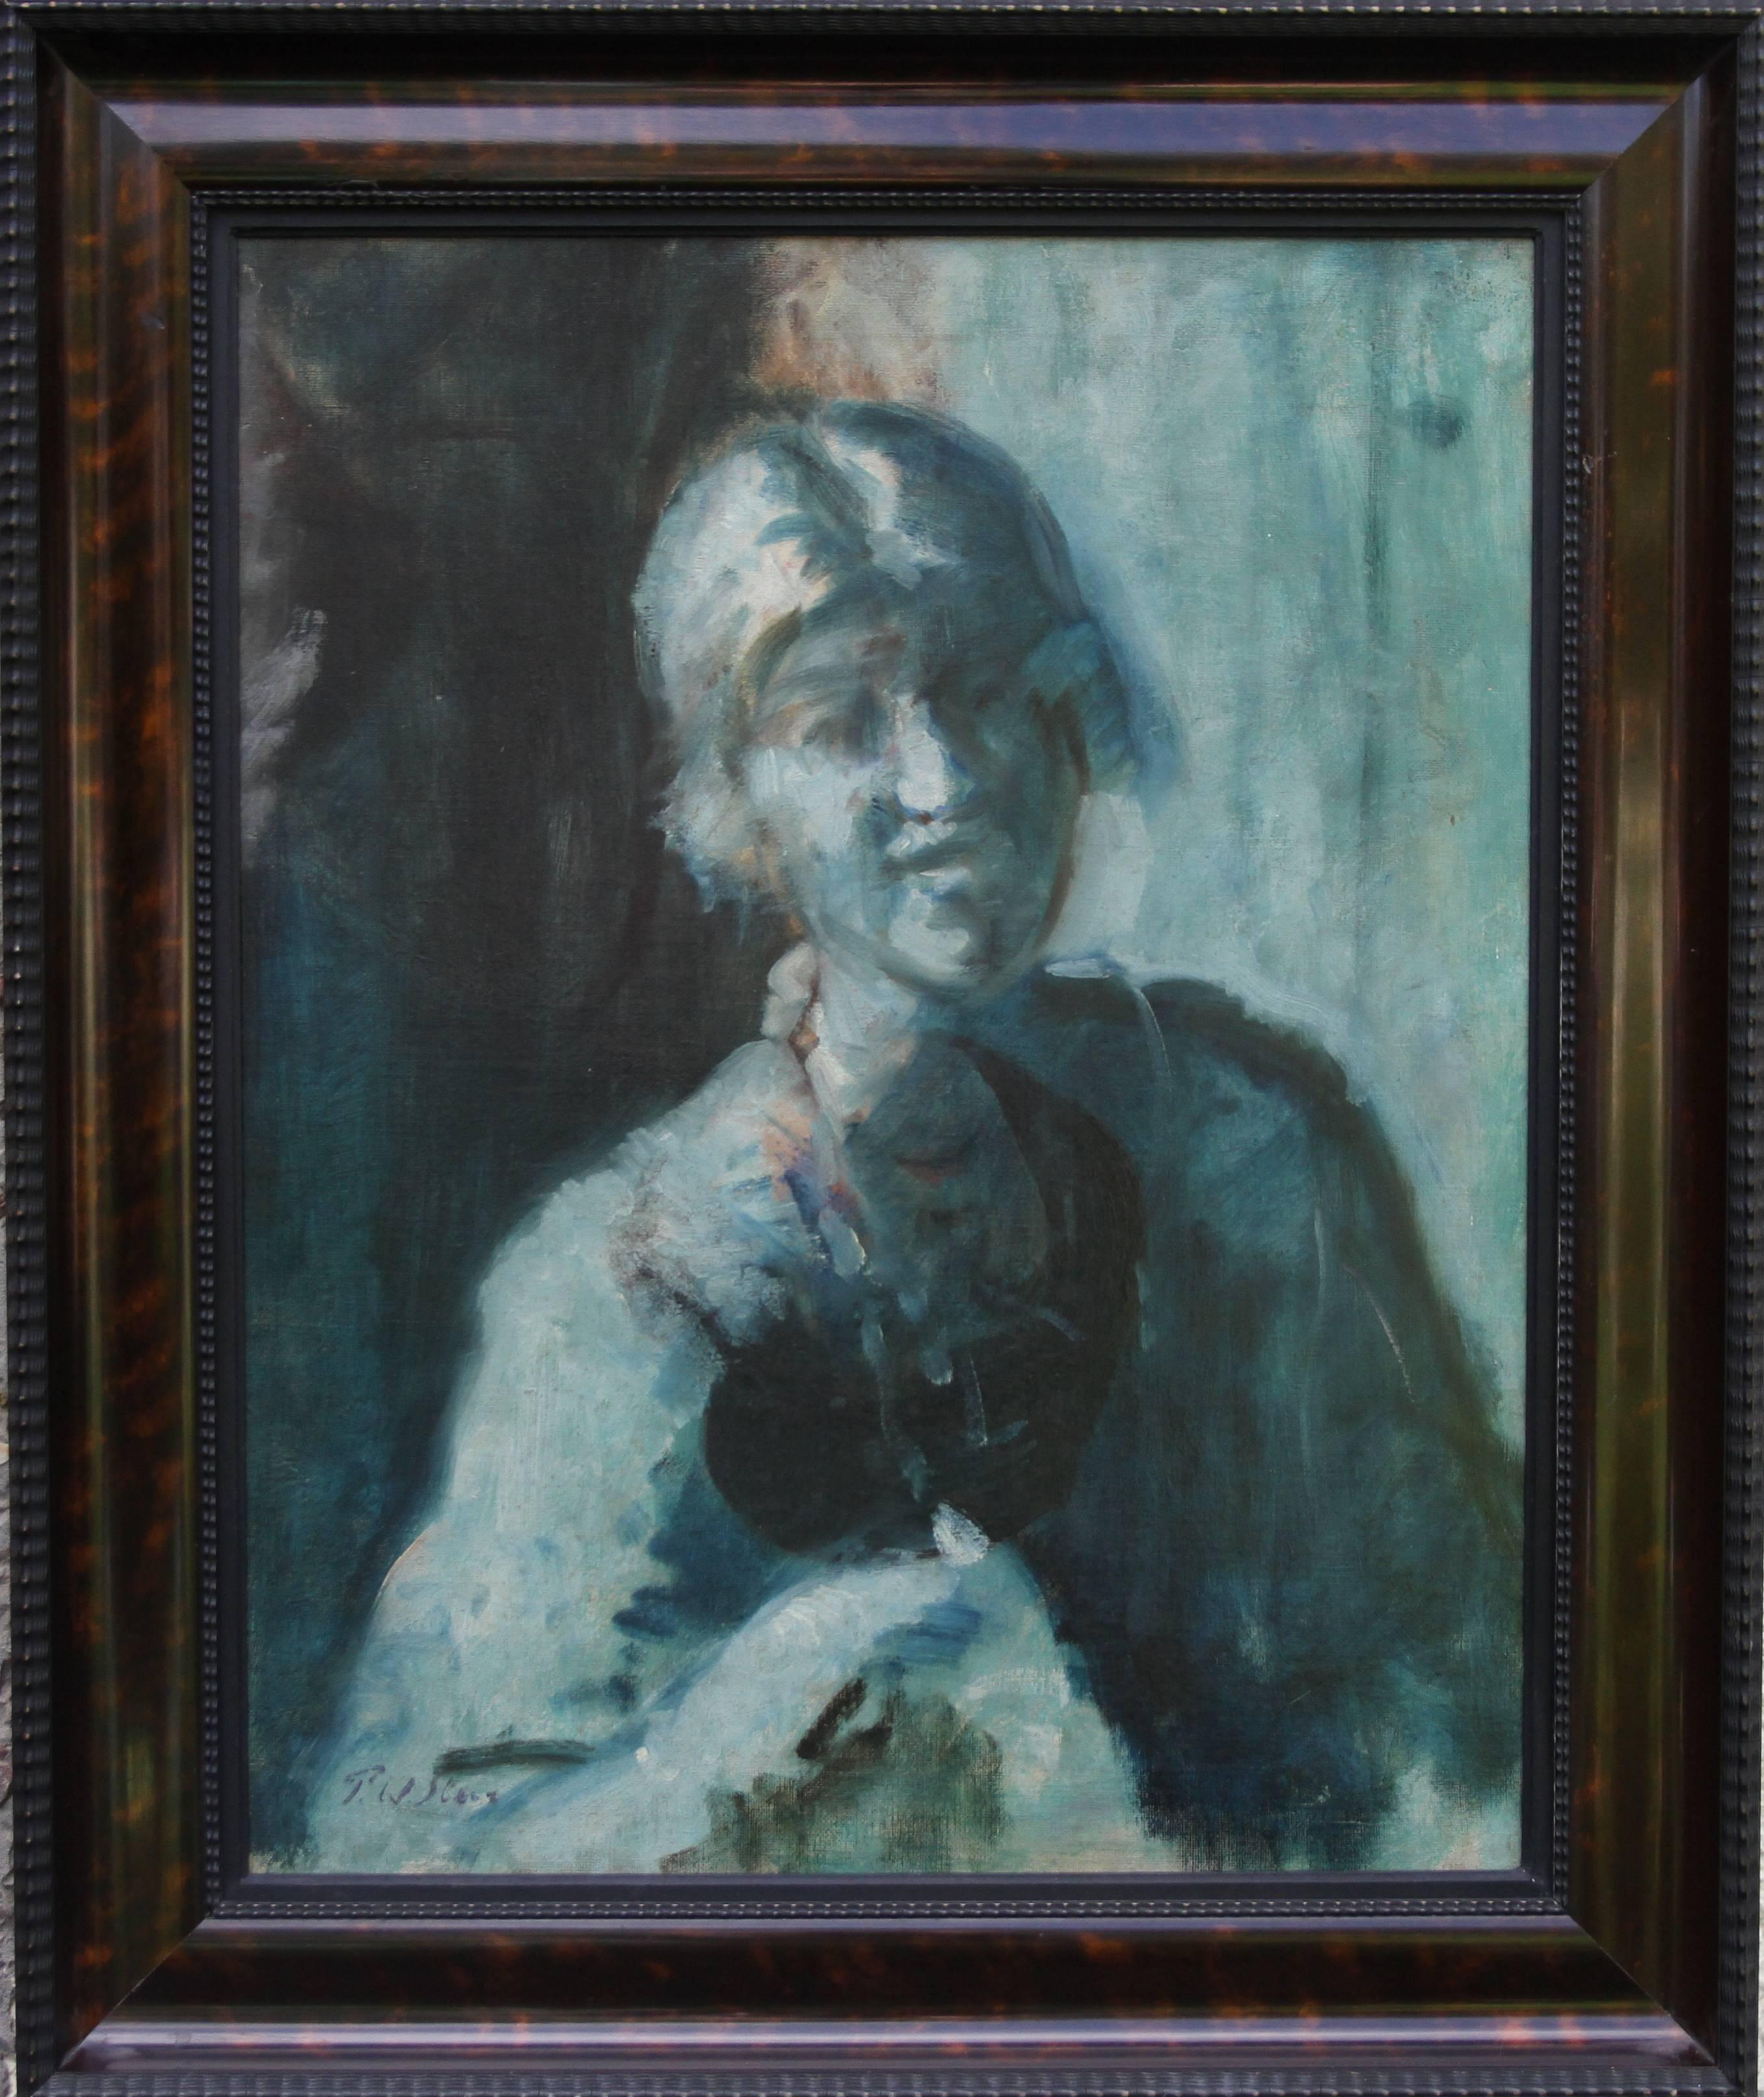 Philip Wilson Steer Portrait Painting - Portrait of a Woman - Blue - British Edwardian Impressionist art oil painting 